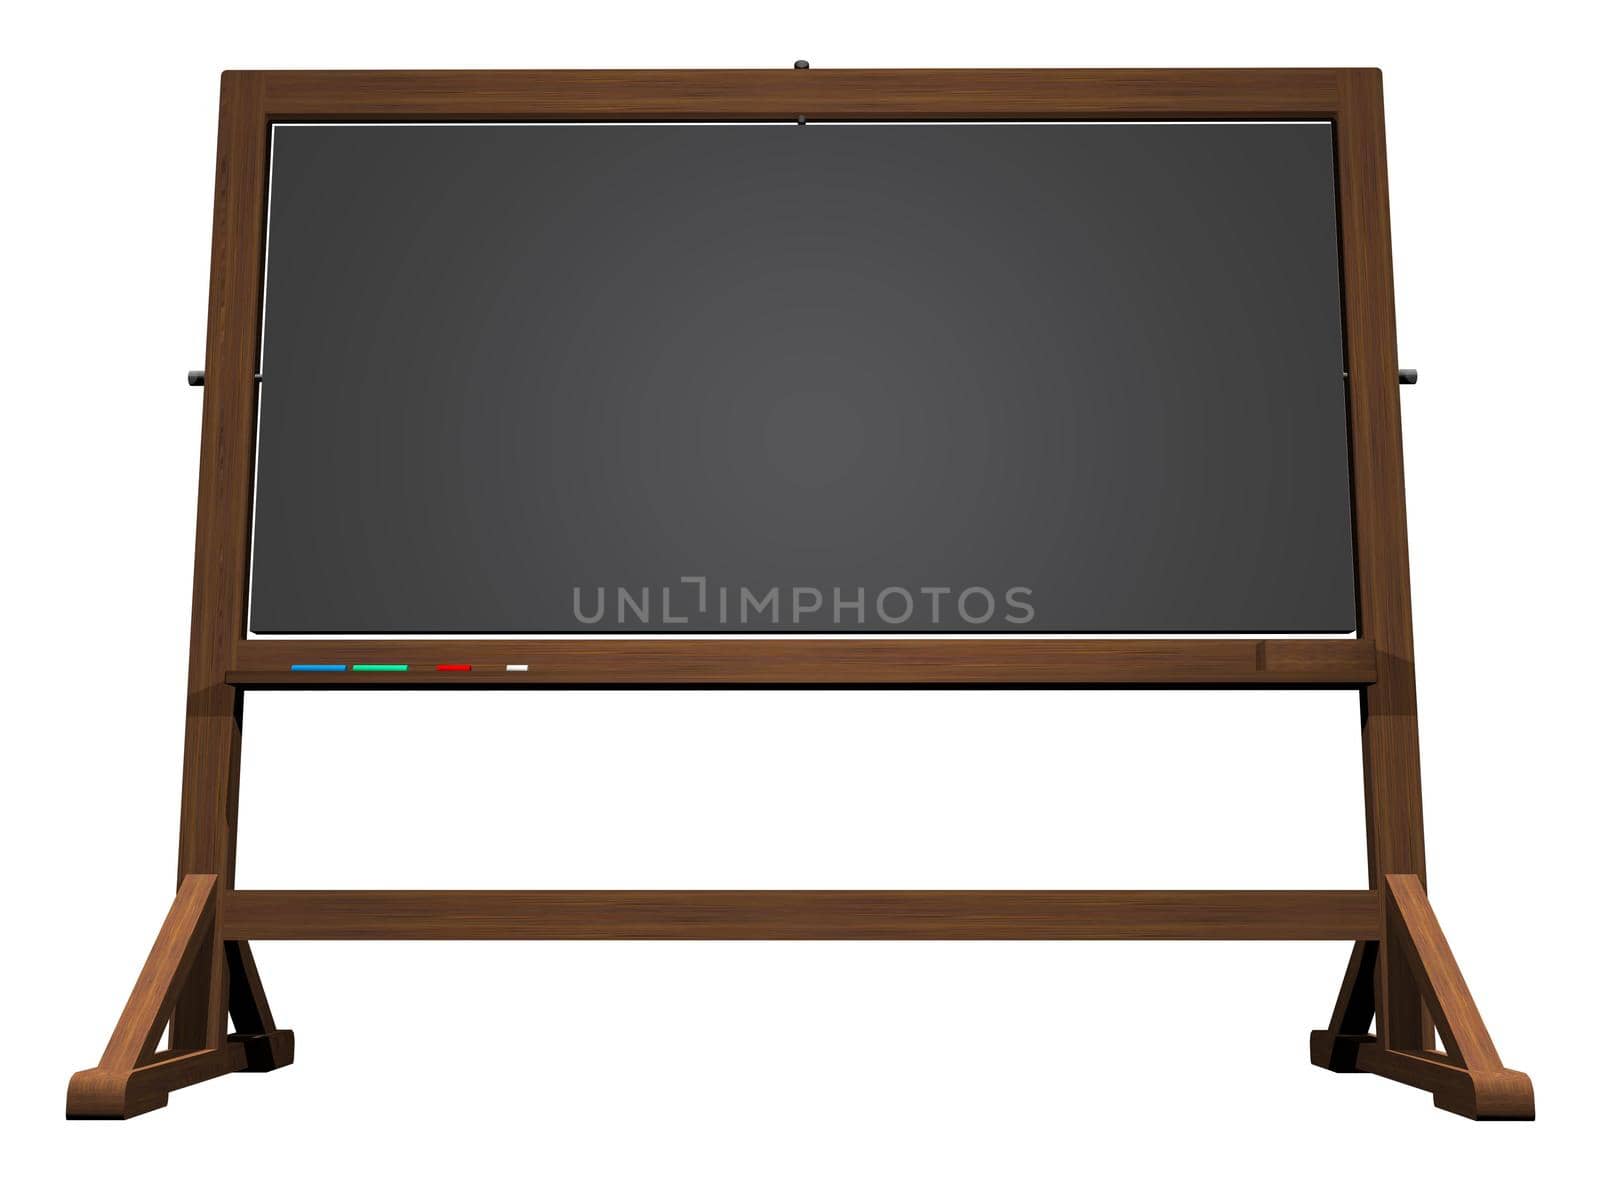 School blackboard isolated in white background - 3D render